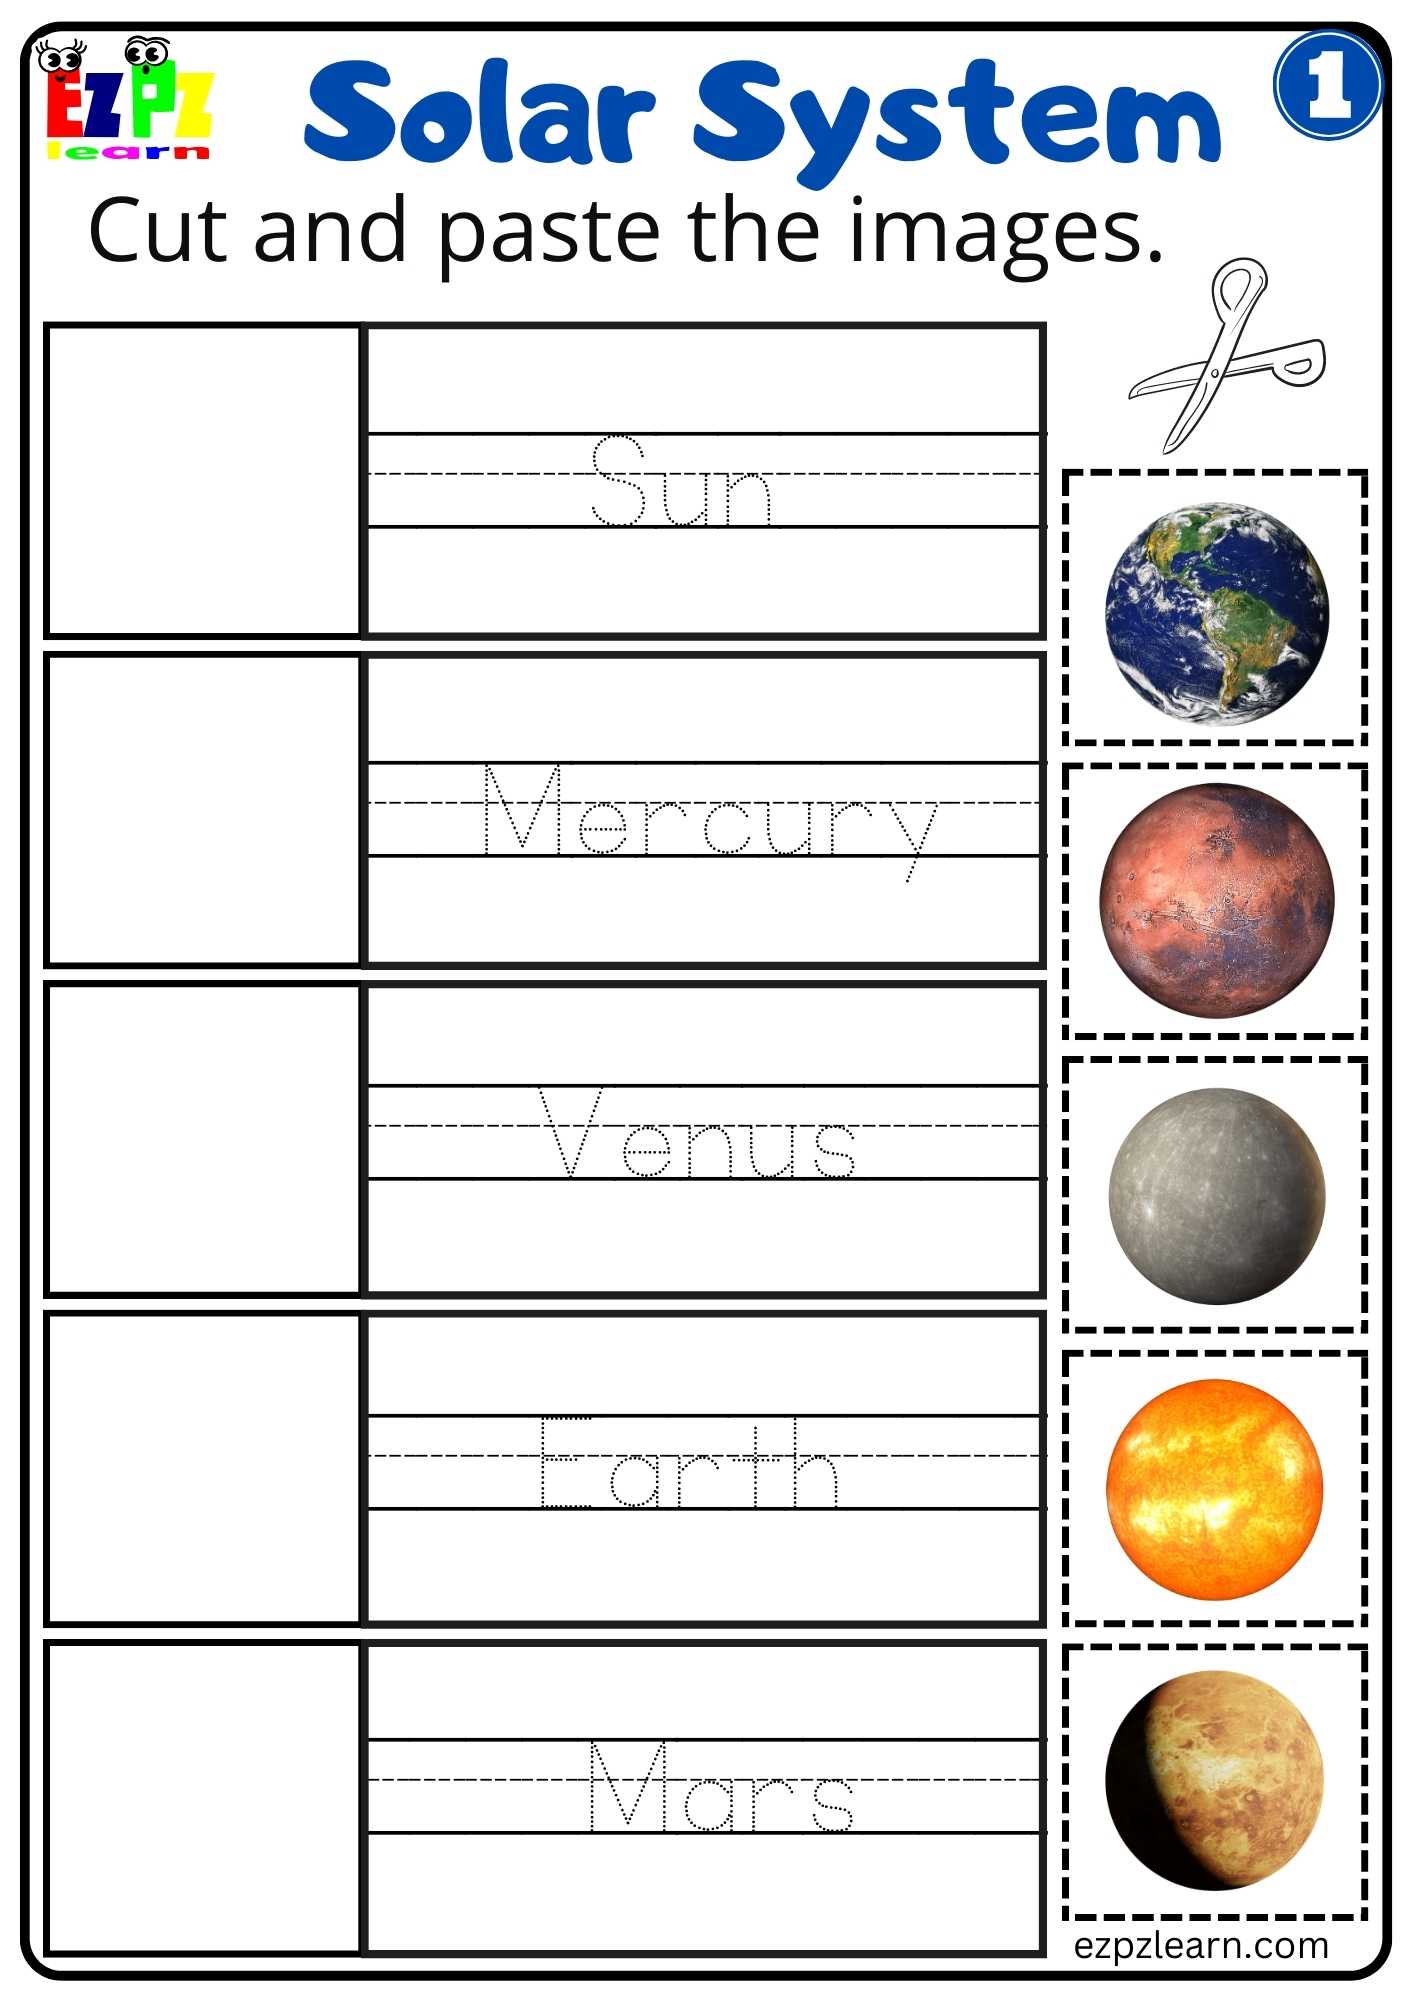 Solar System Cut and Paste Worksheet 1 For Kids - Ezpzlearn.com